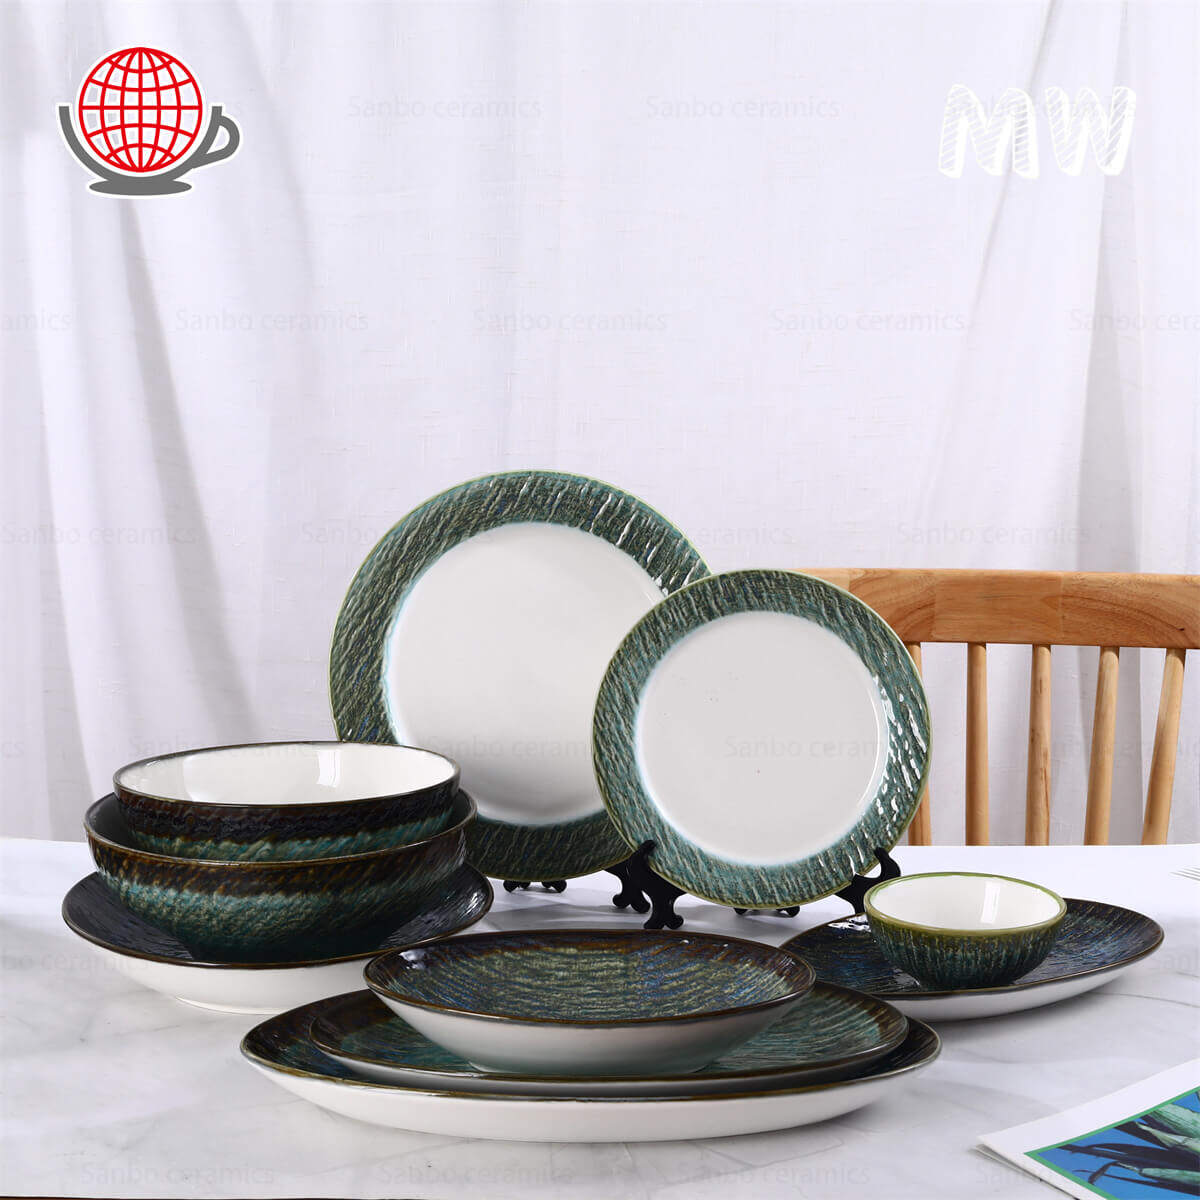 western dinnerware set,colored dinnerware,dining sets plates bowls